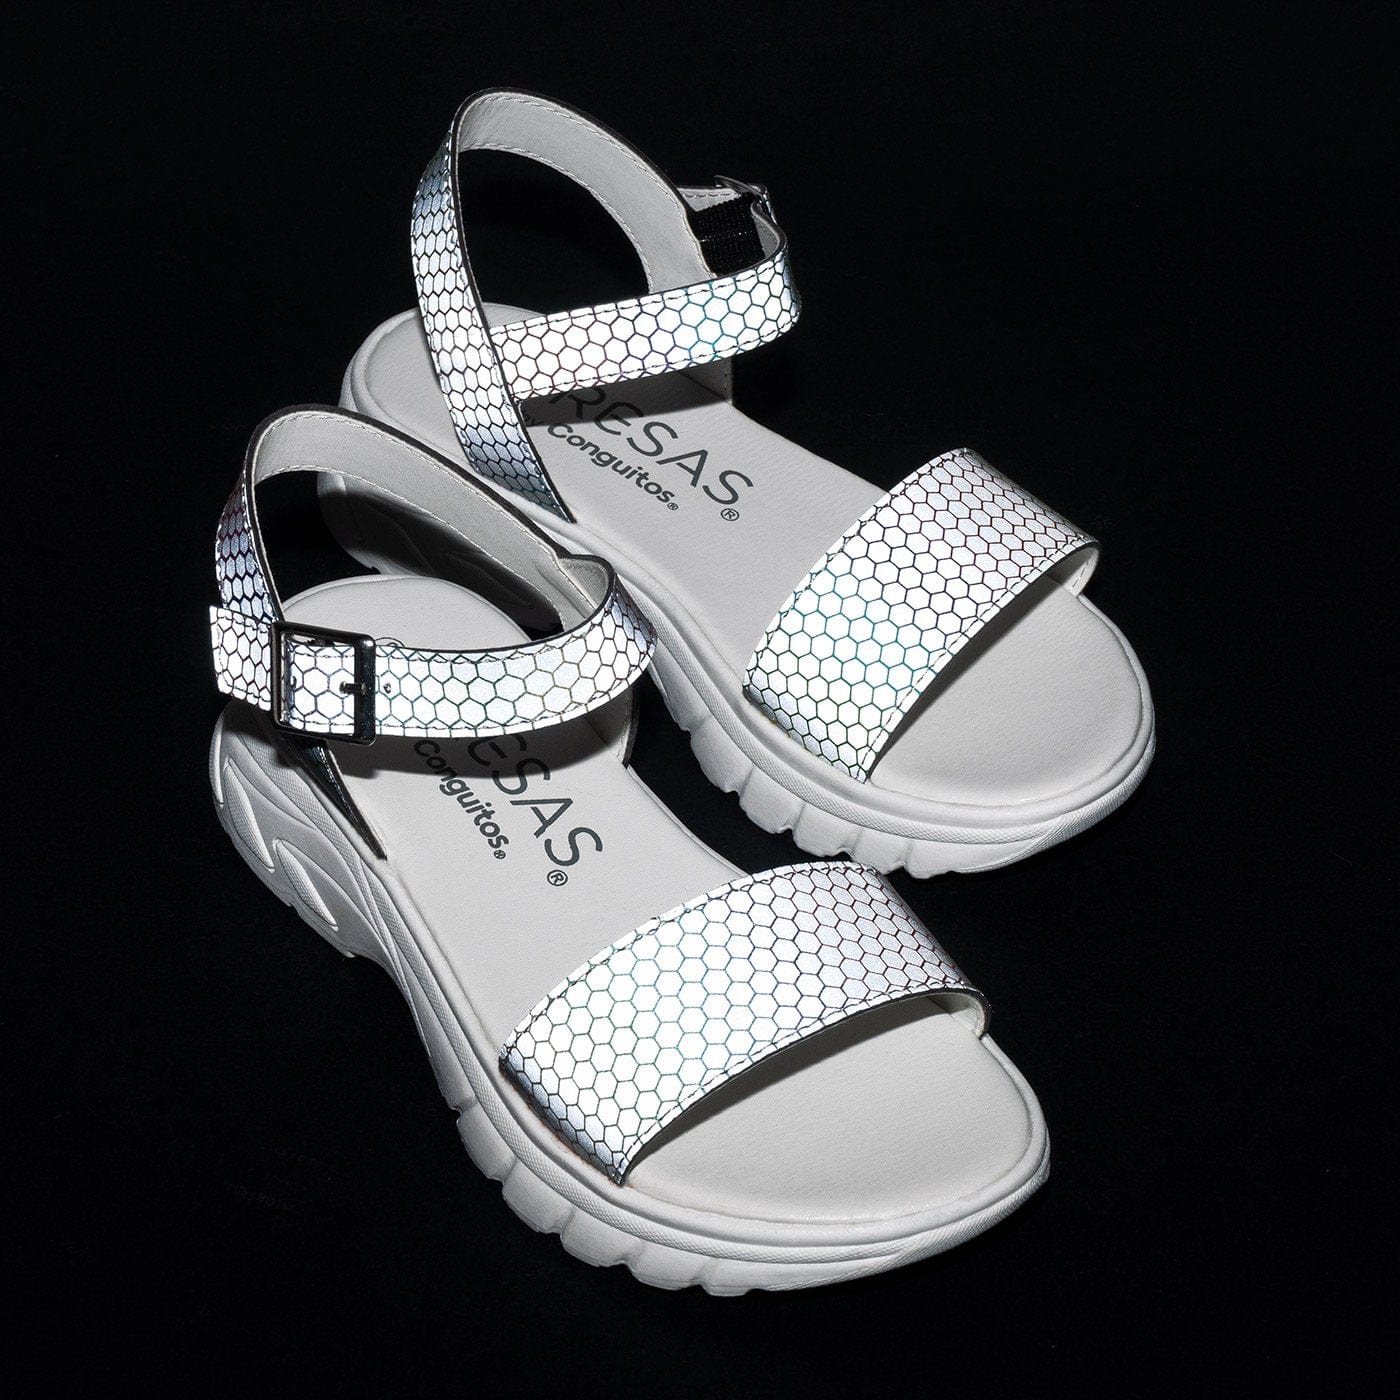 FRESAS CON NATA Shoes Girl's Reflectant Sports Sandals